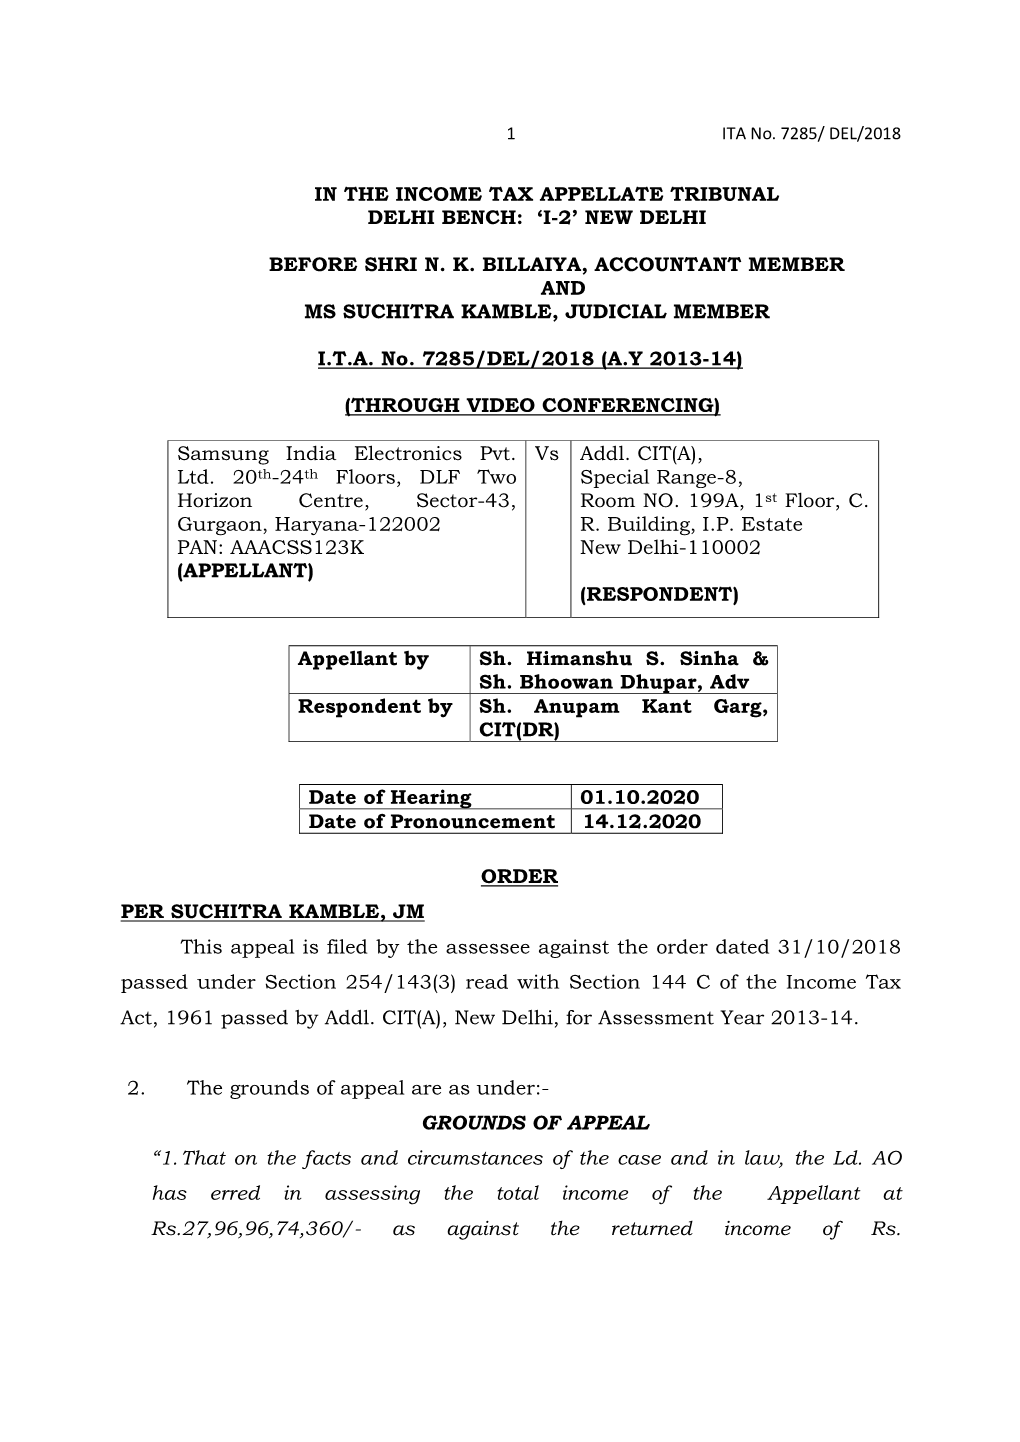 In the Income Tax Appellate Tribunal Delhi Bench: 'I-2' New Delhi Before Shri N. K. Billaiya, Accountant Member and Ms Such